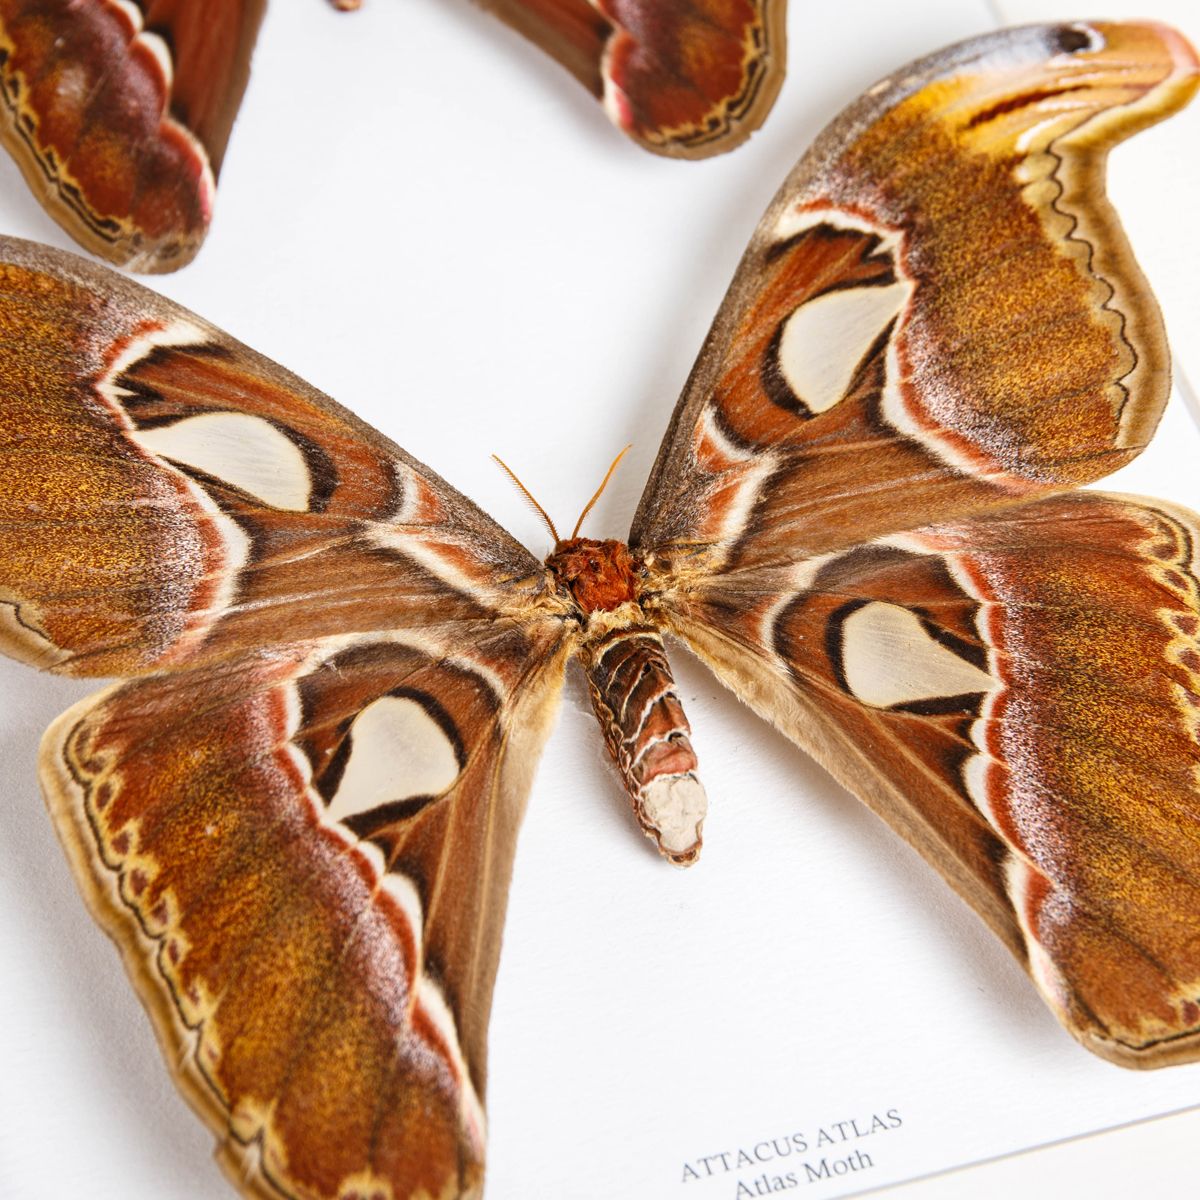 Atlas Moth Male & Female Pair in Box Frame (Attacus atlas)